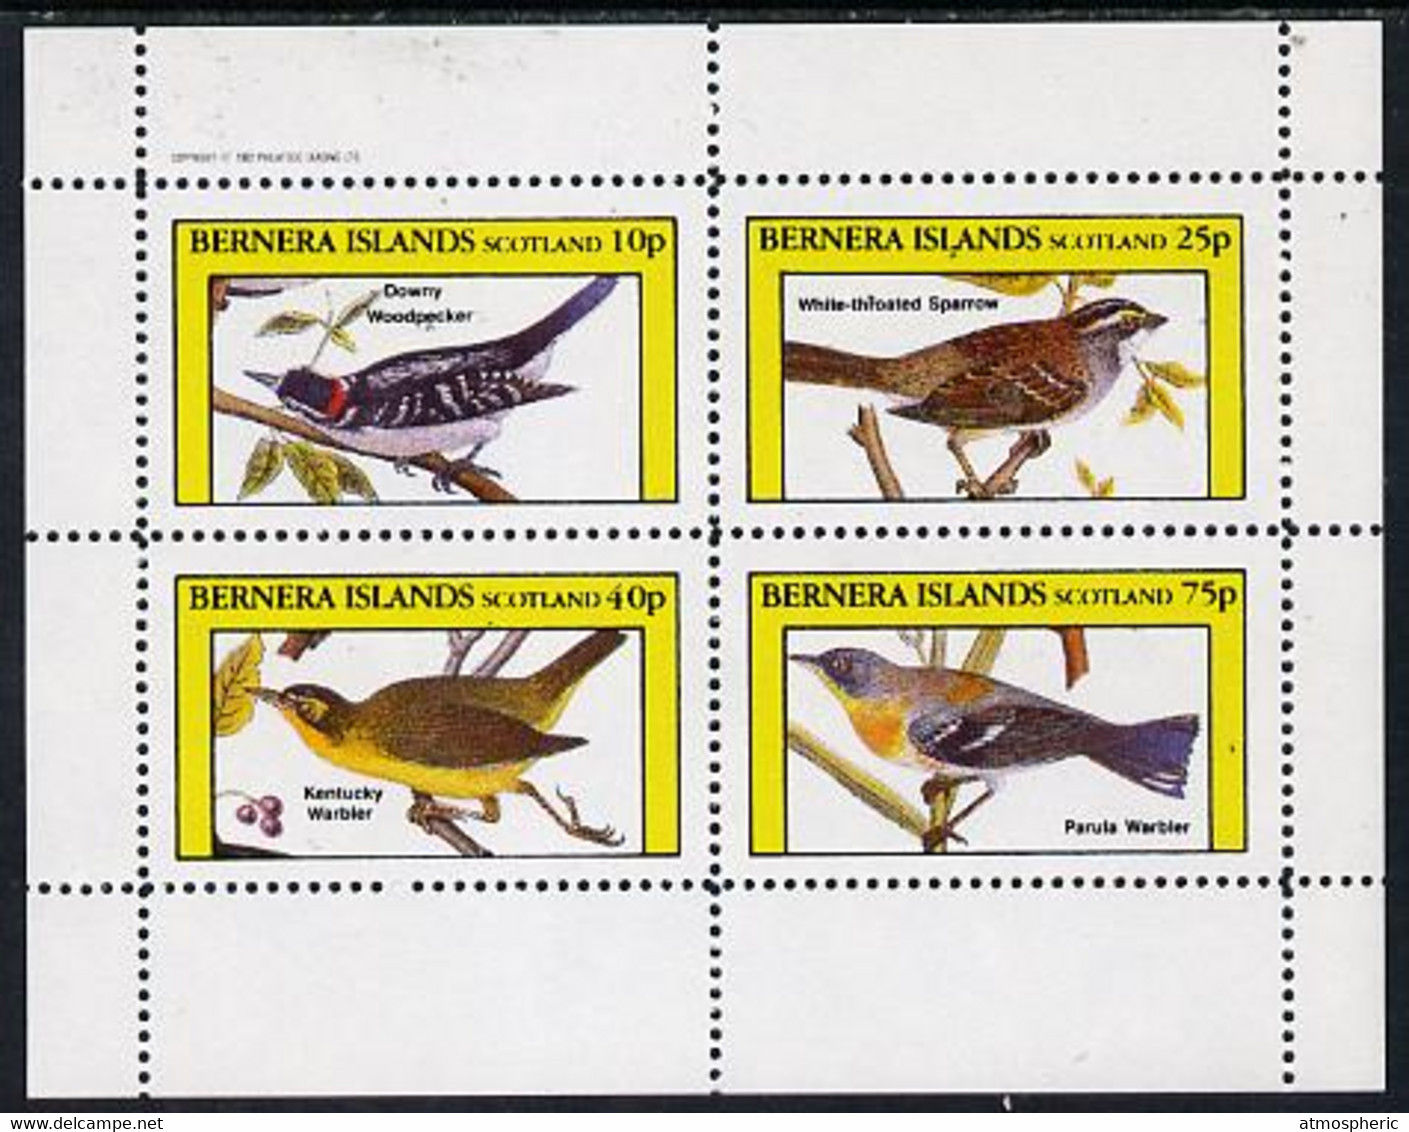 Bernera 1982 Birds #22 (Woodpecker, Warblers Etc) Perf  Set Of 4 Values (10p To 75p) U/M - Scotland